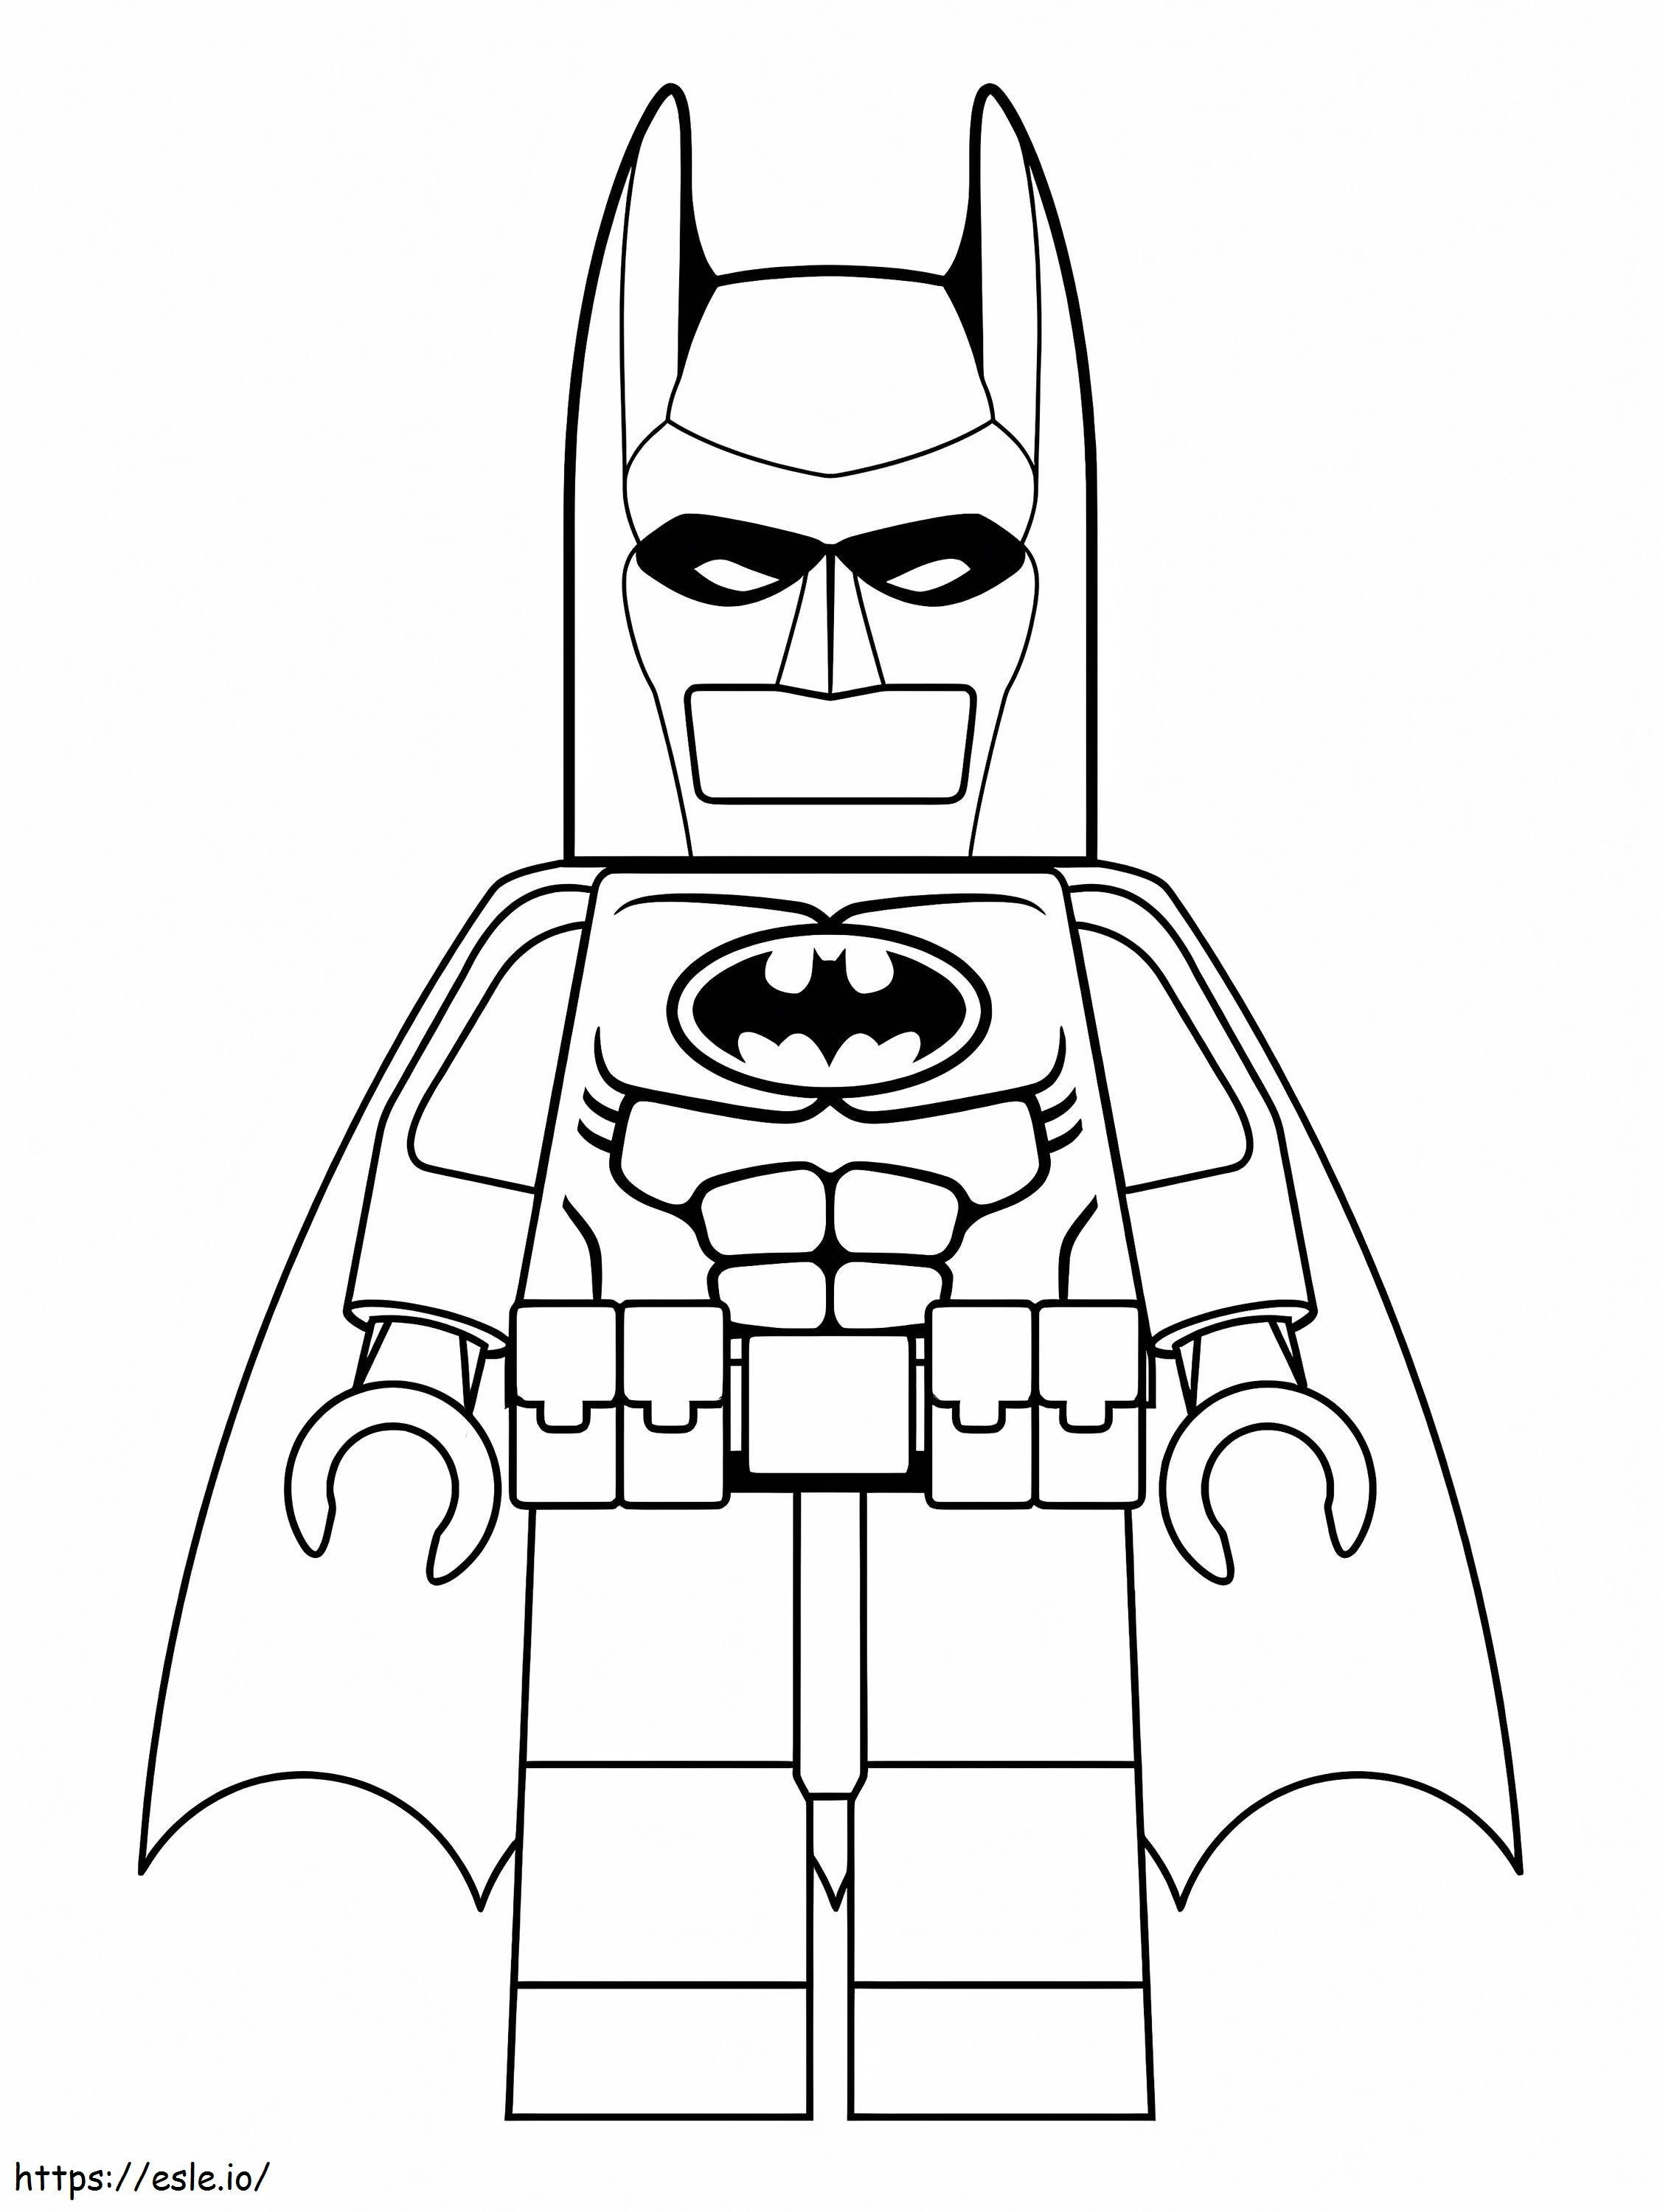 Coloriage LEGO Batman 2 à imprimer dessin